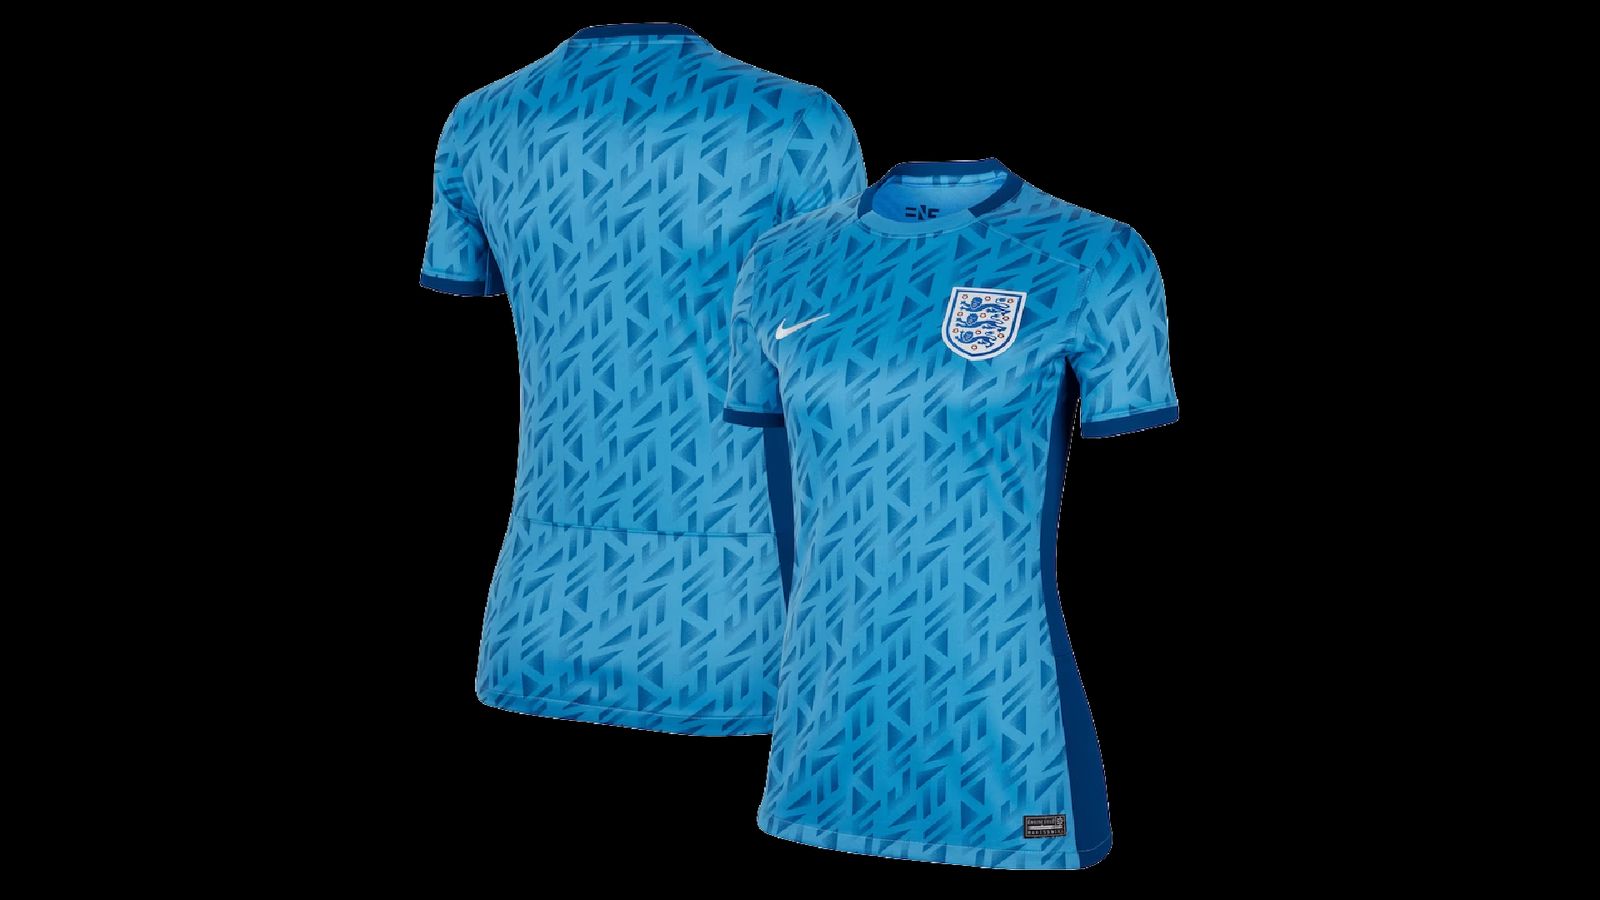 England Nike Women's Away kit product image of a light blue shirt featuring a darker blue geometric print.